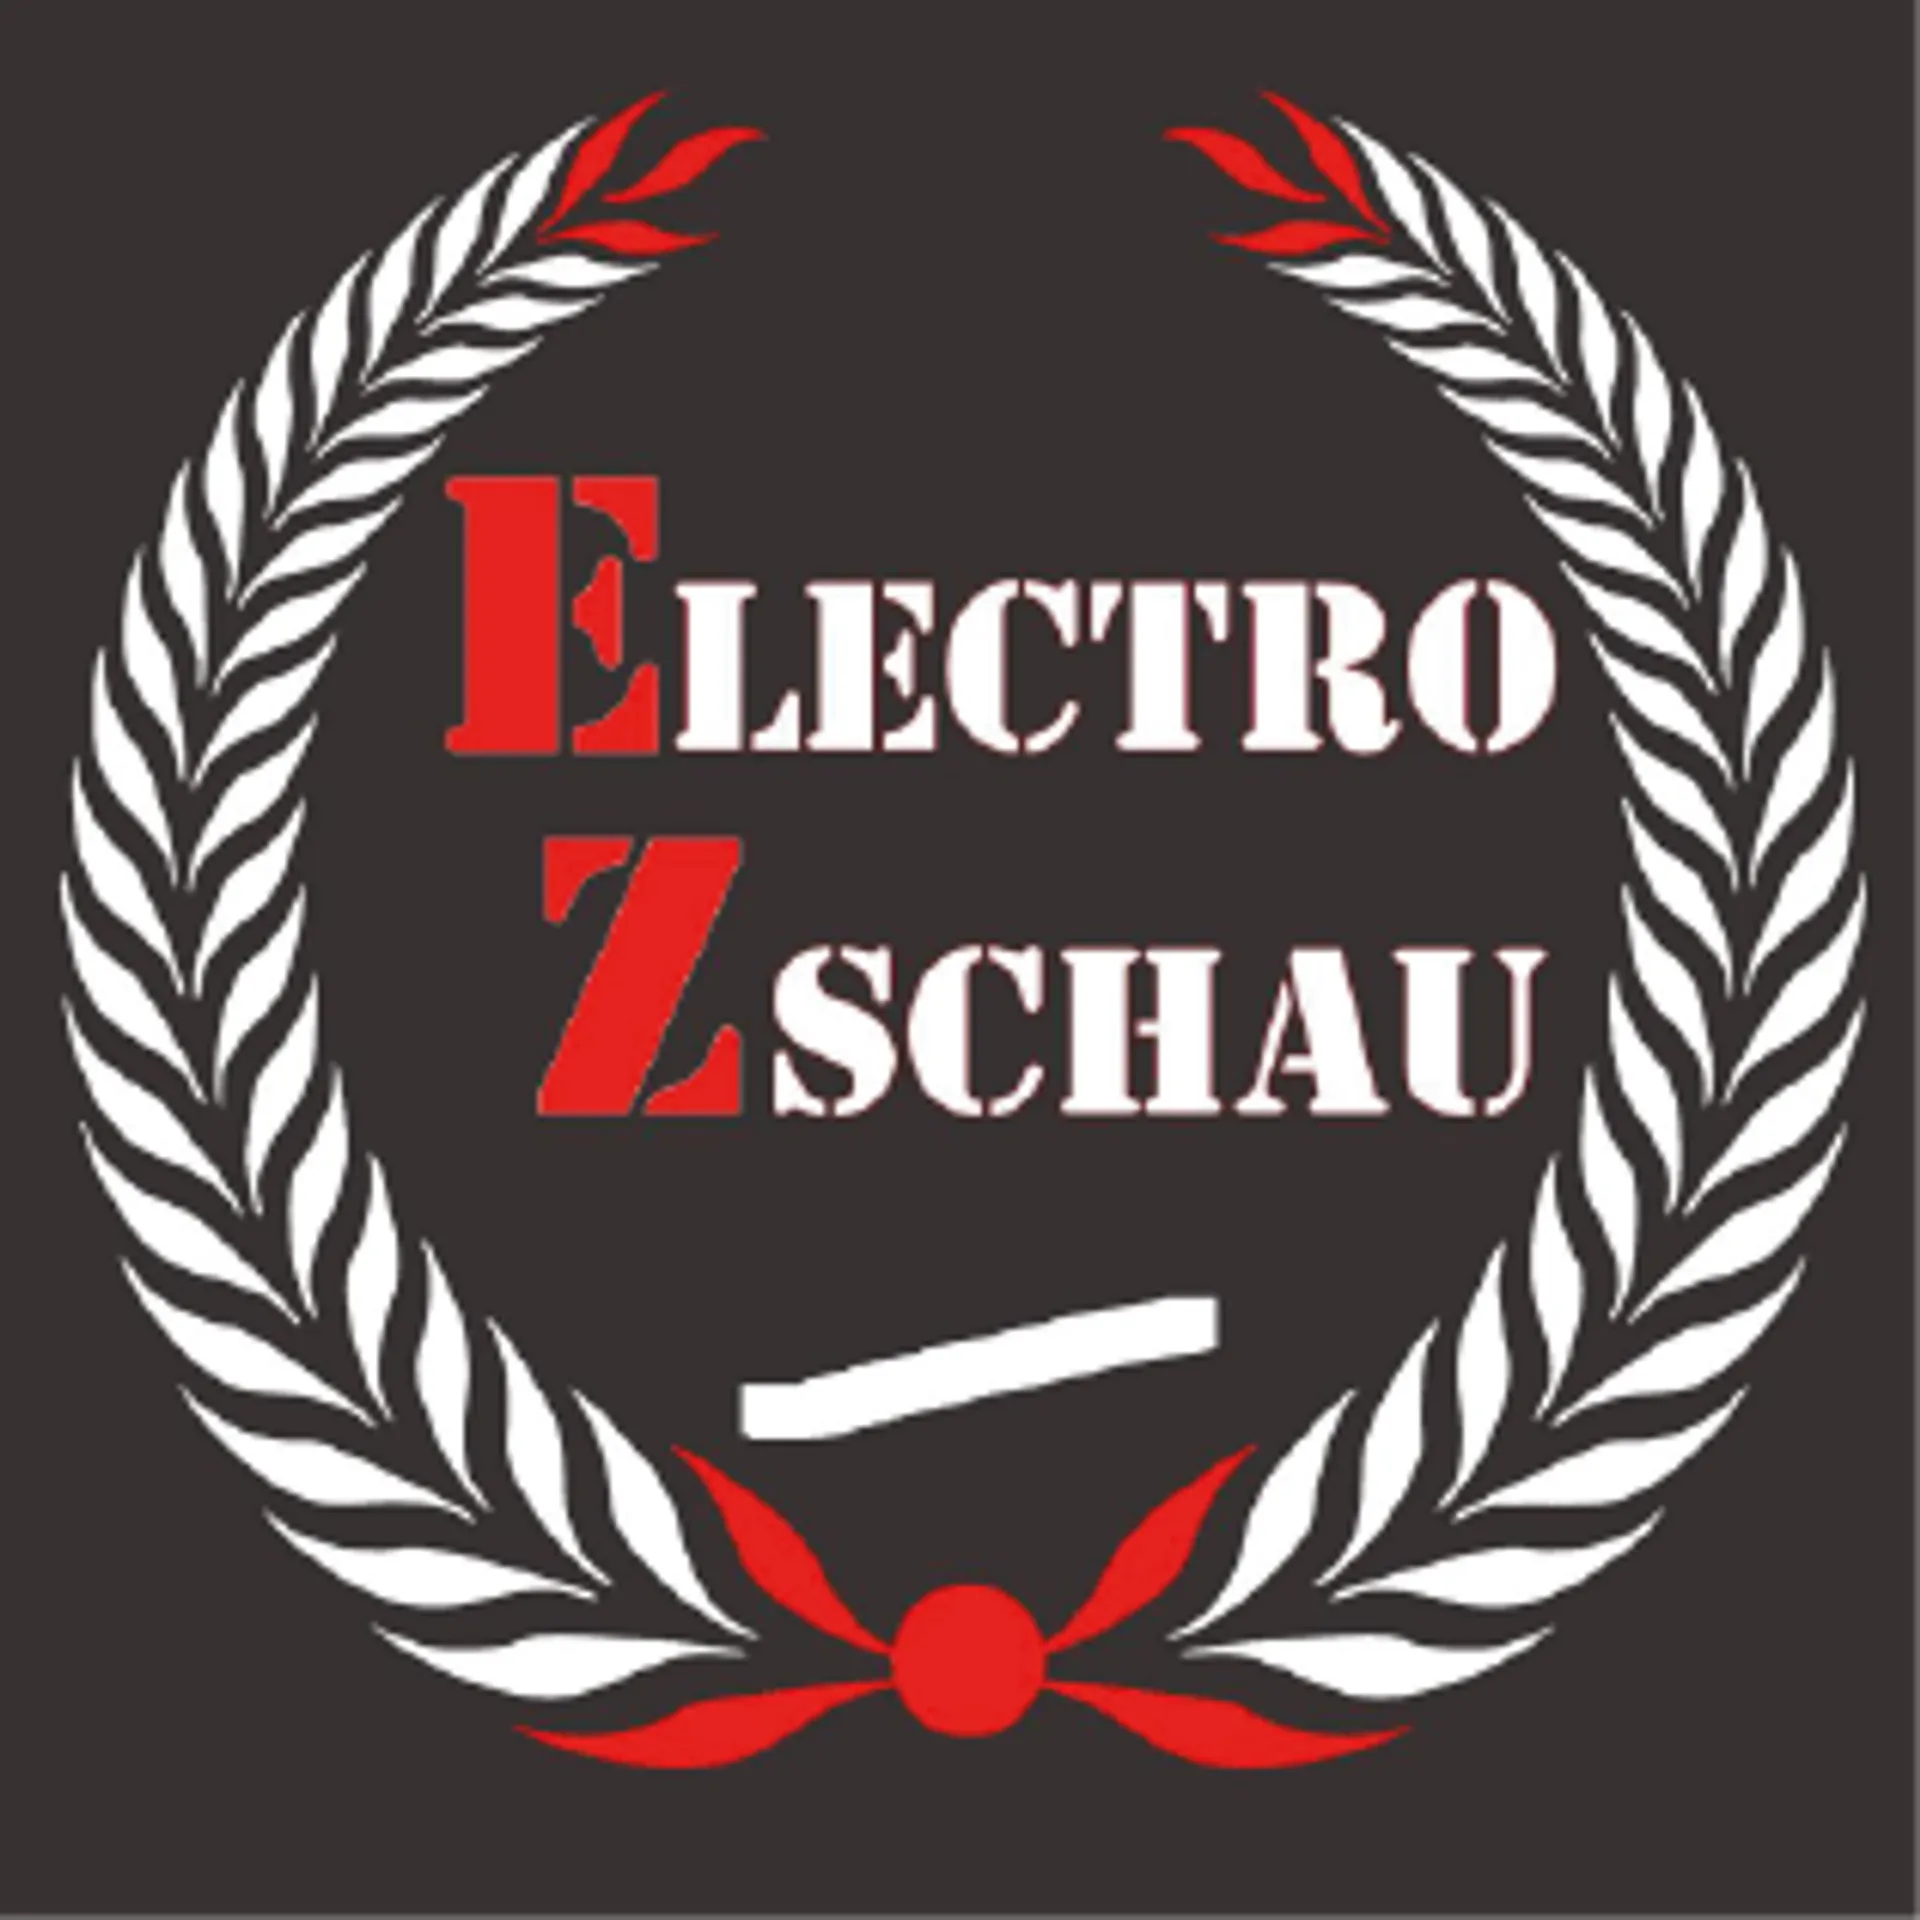 ELECTRO-ZSCHAU logo in de folder van deze week